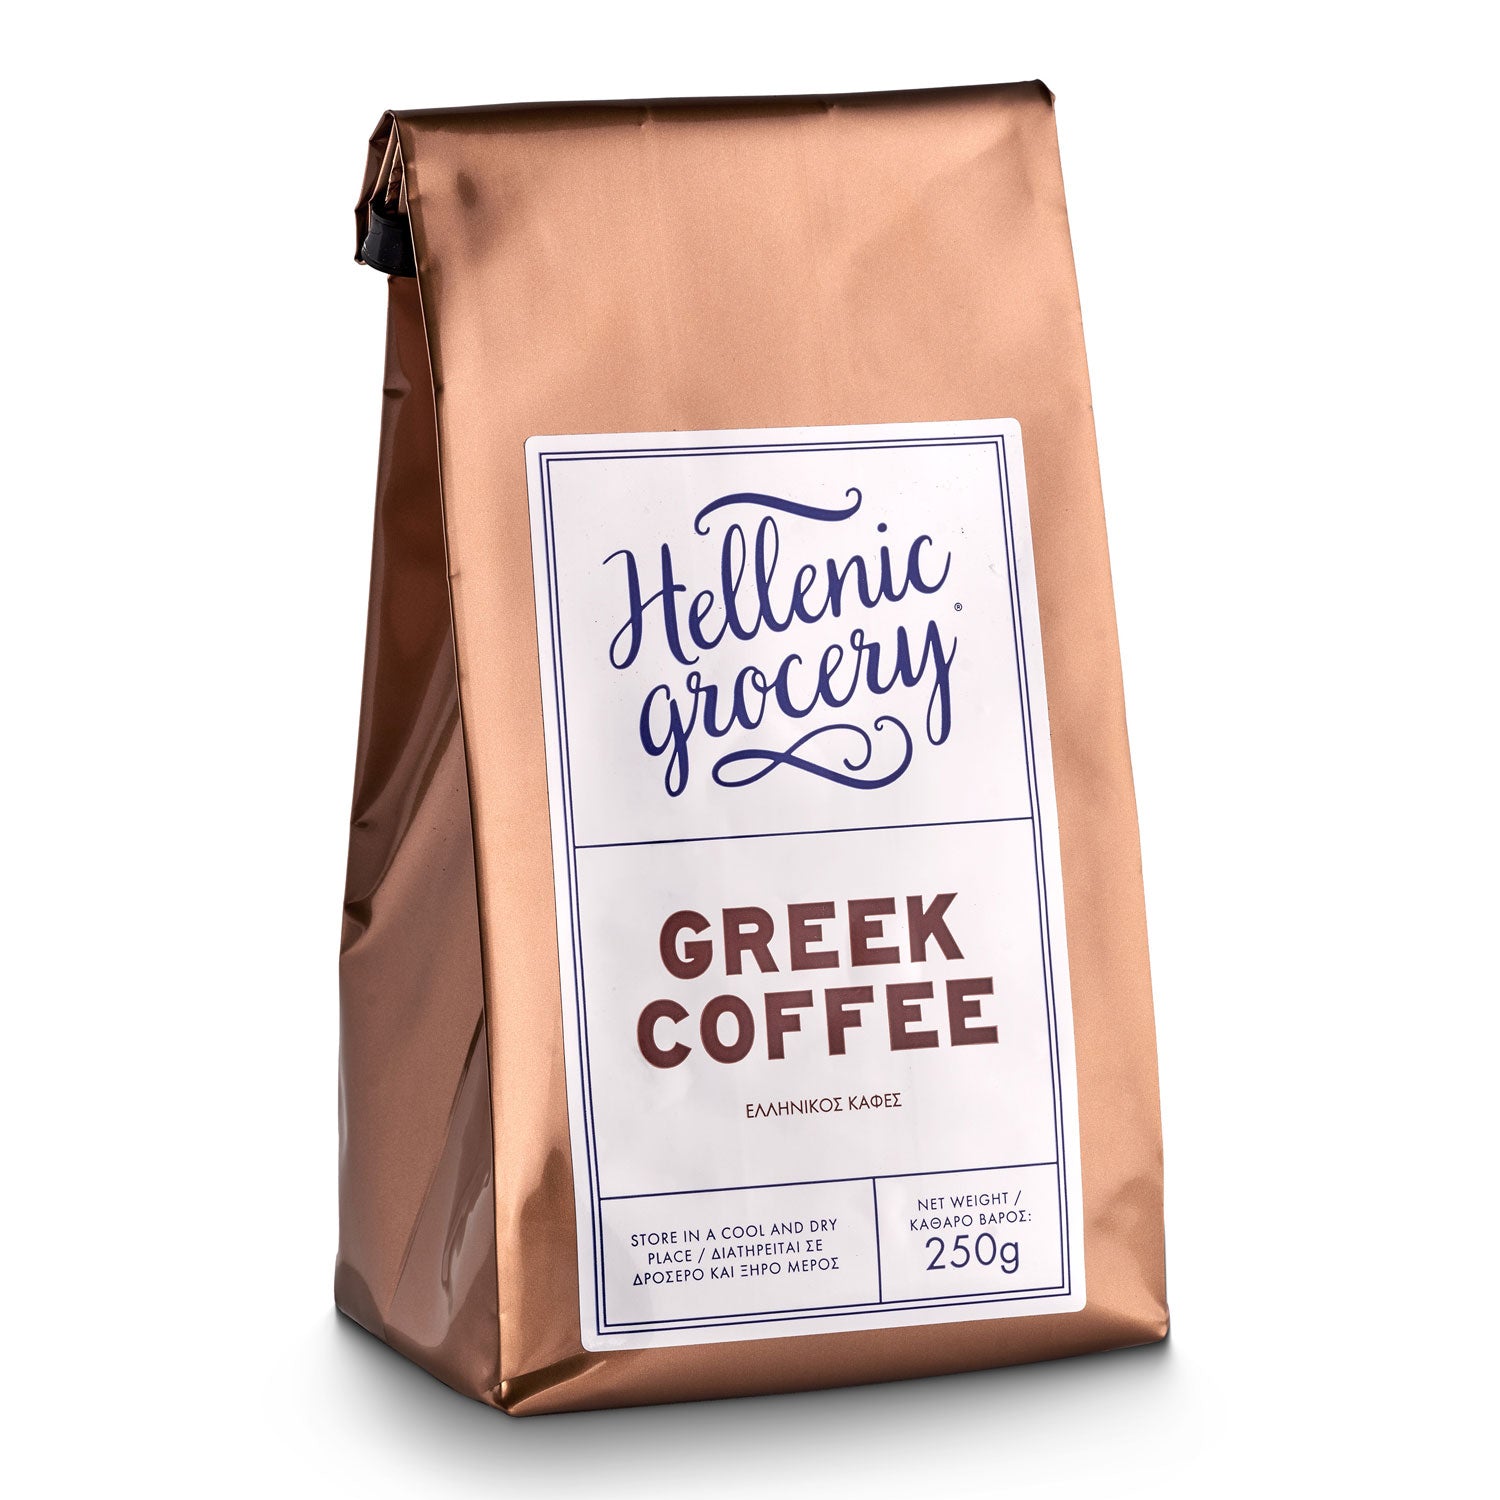 Traditional Greek Coffee - 250g - Hellenic Grocery